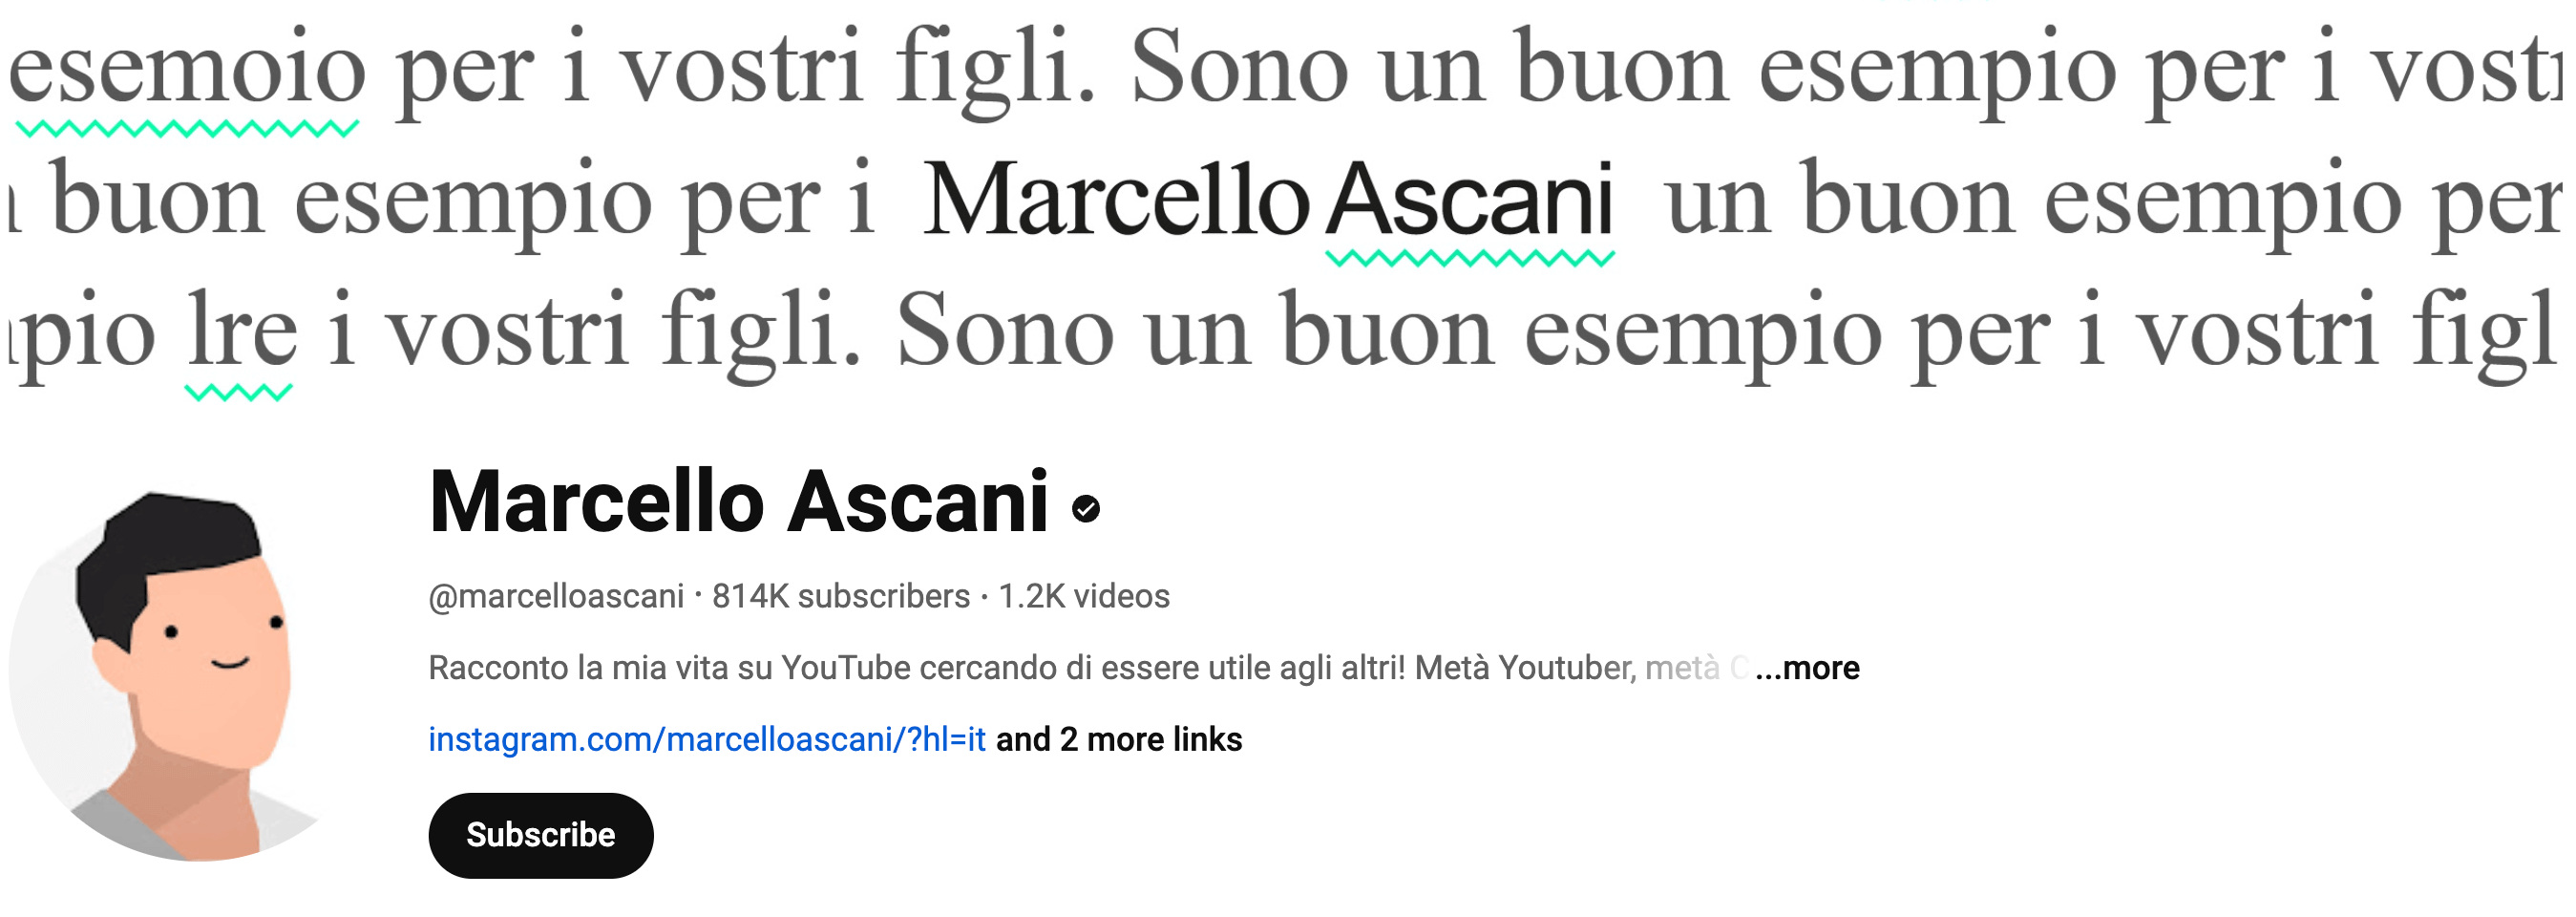 Marcello Ascani deal